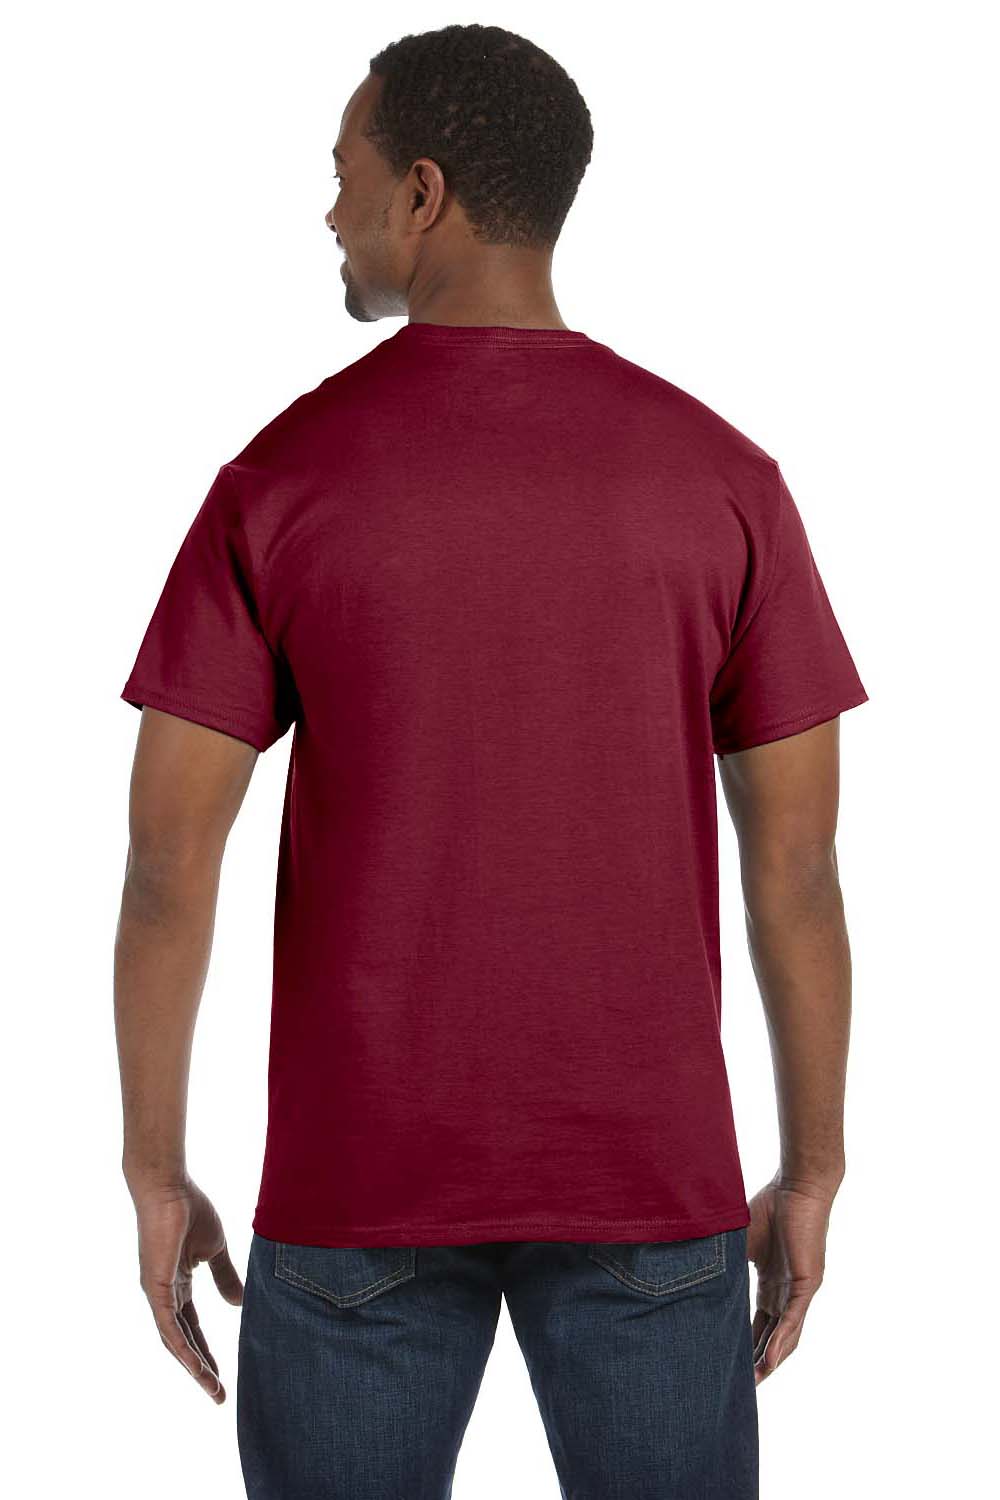 Hanes 5250T Mens ComfortSoft Short Sleeve Crewneck T-Shirt Cardinal Red Back